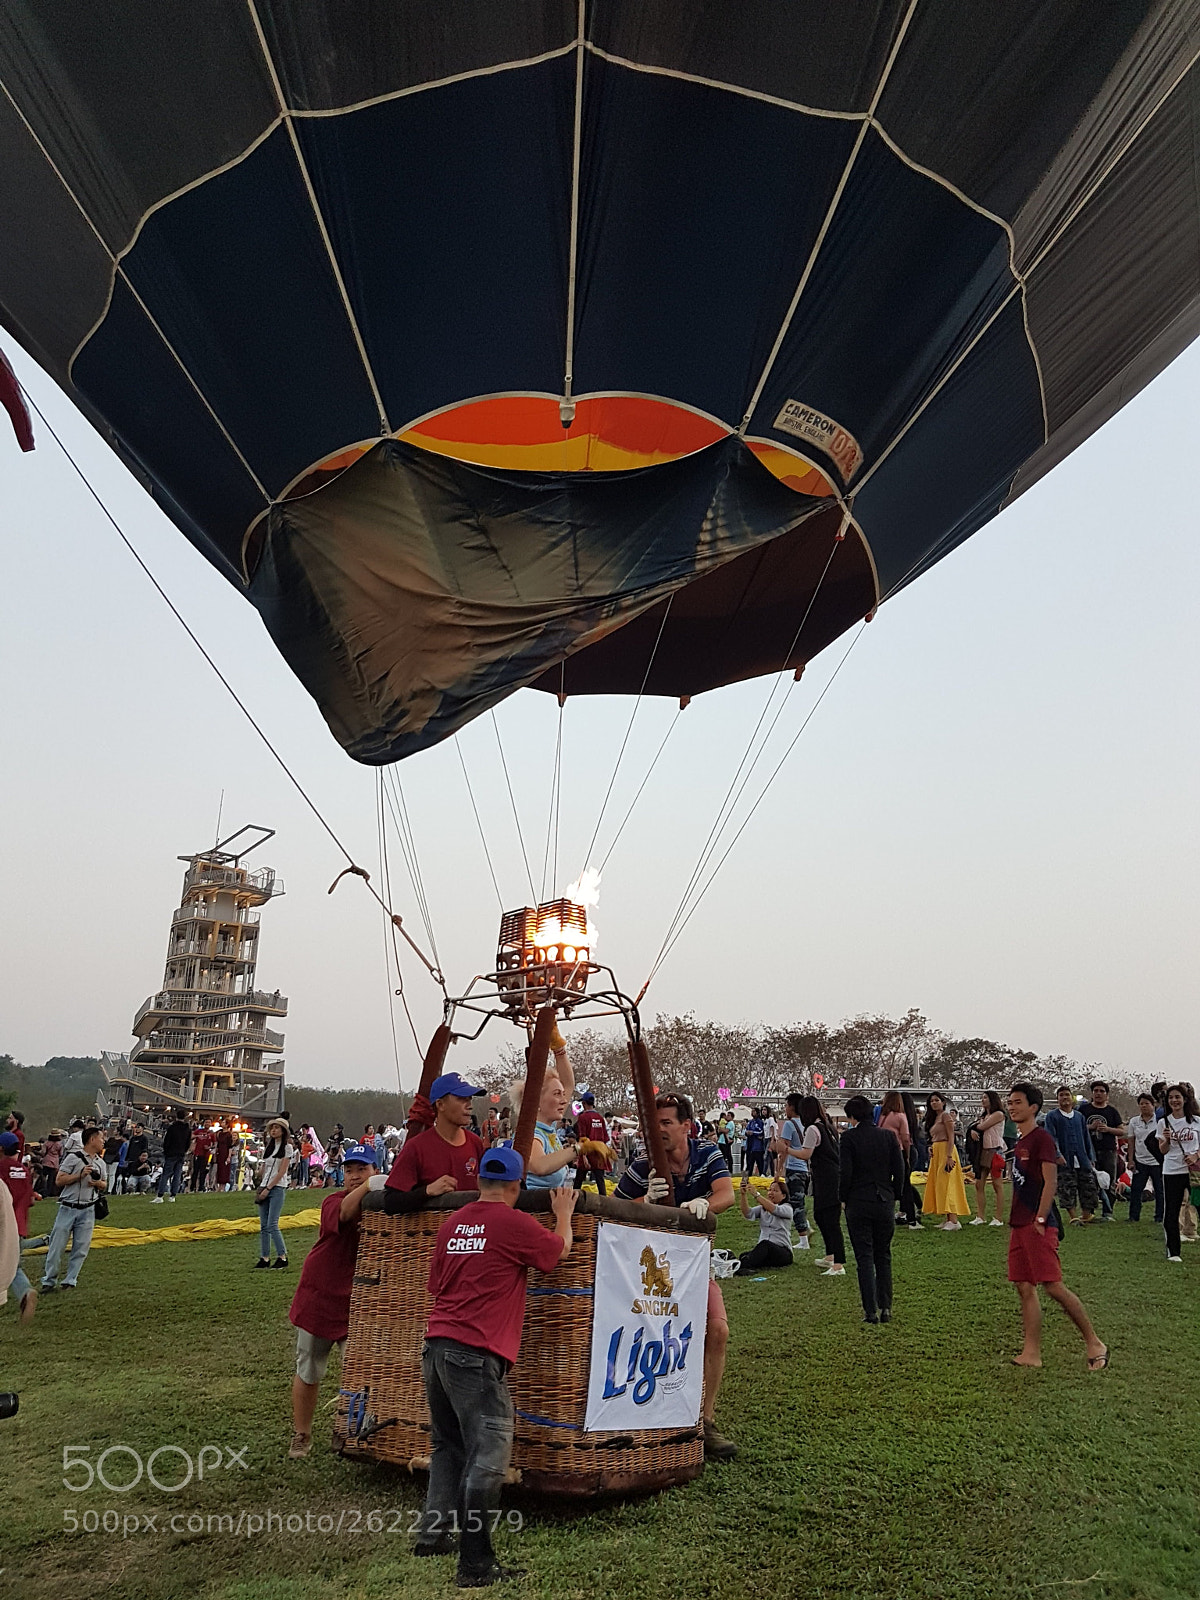 Samsung Galaxy S7 sample photo. Chiangrai hotair balloon fiesta 2018 photography